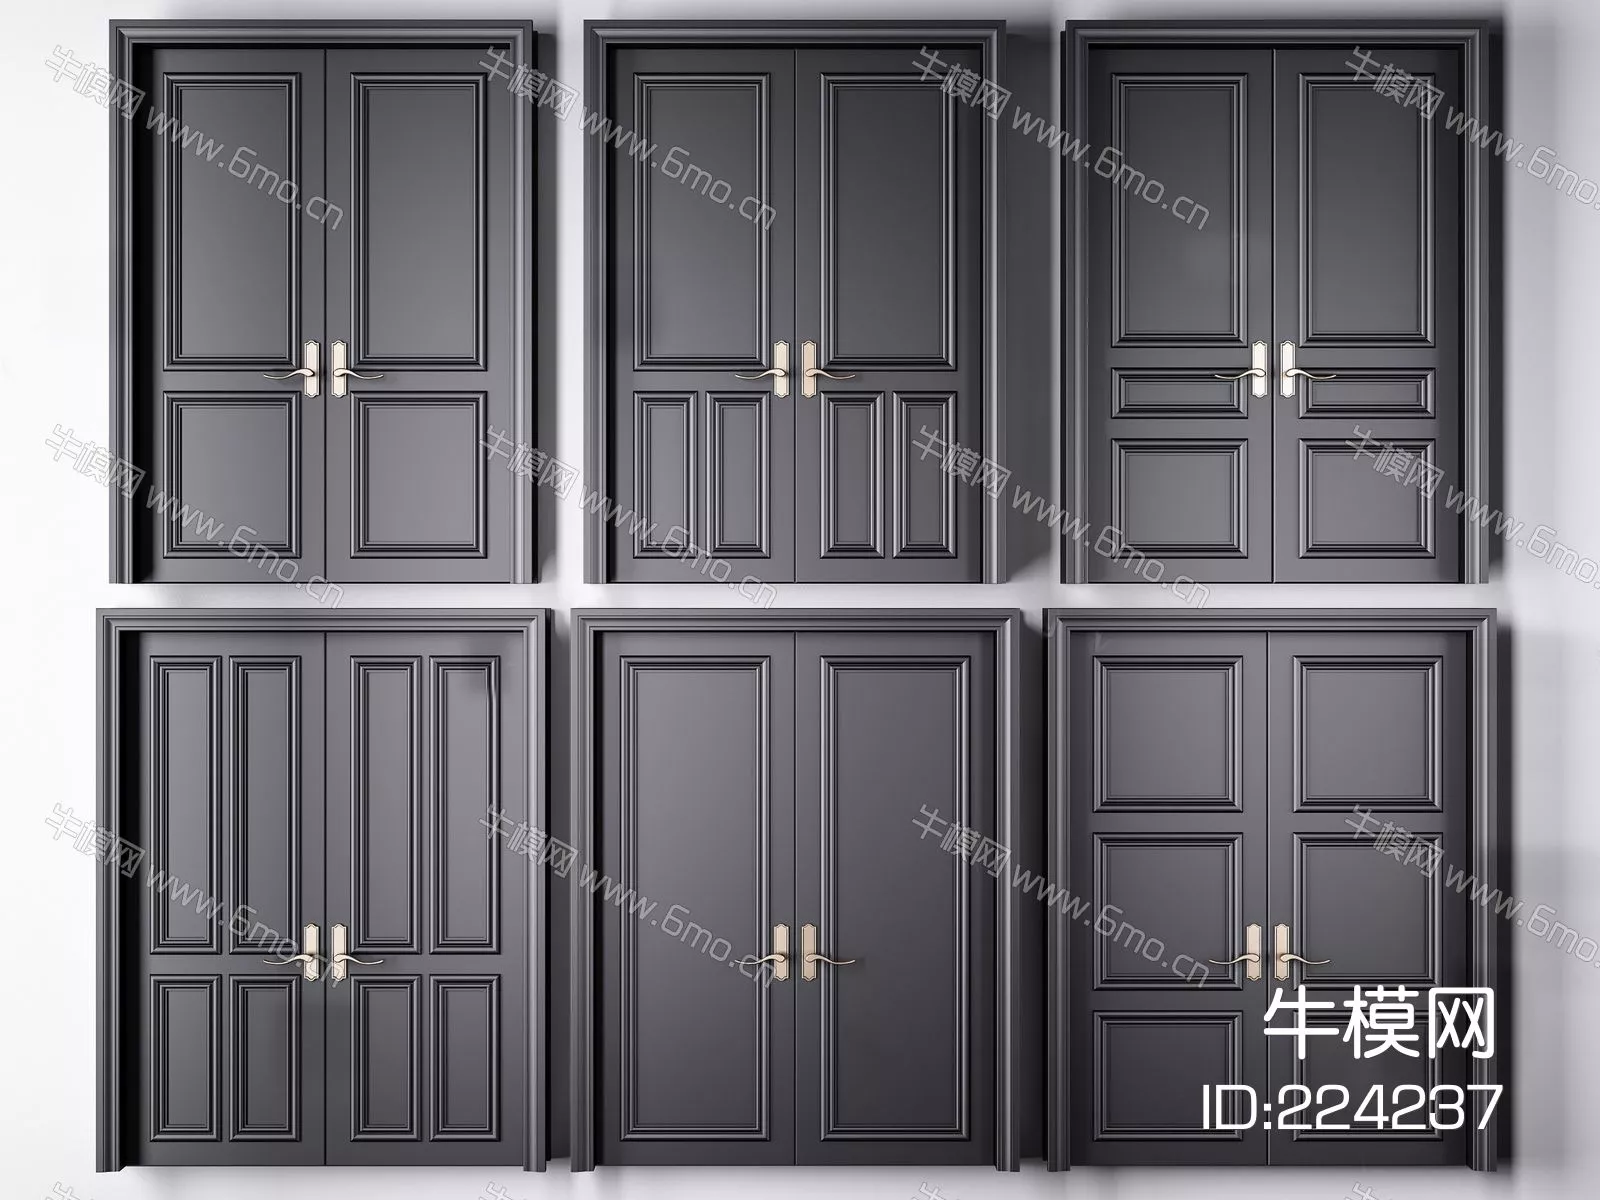 MODERN DOOR AND WINDOWS - SKETCHUP 3D MODEL - ENSCAPE - 224237